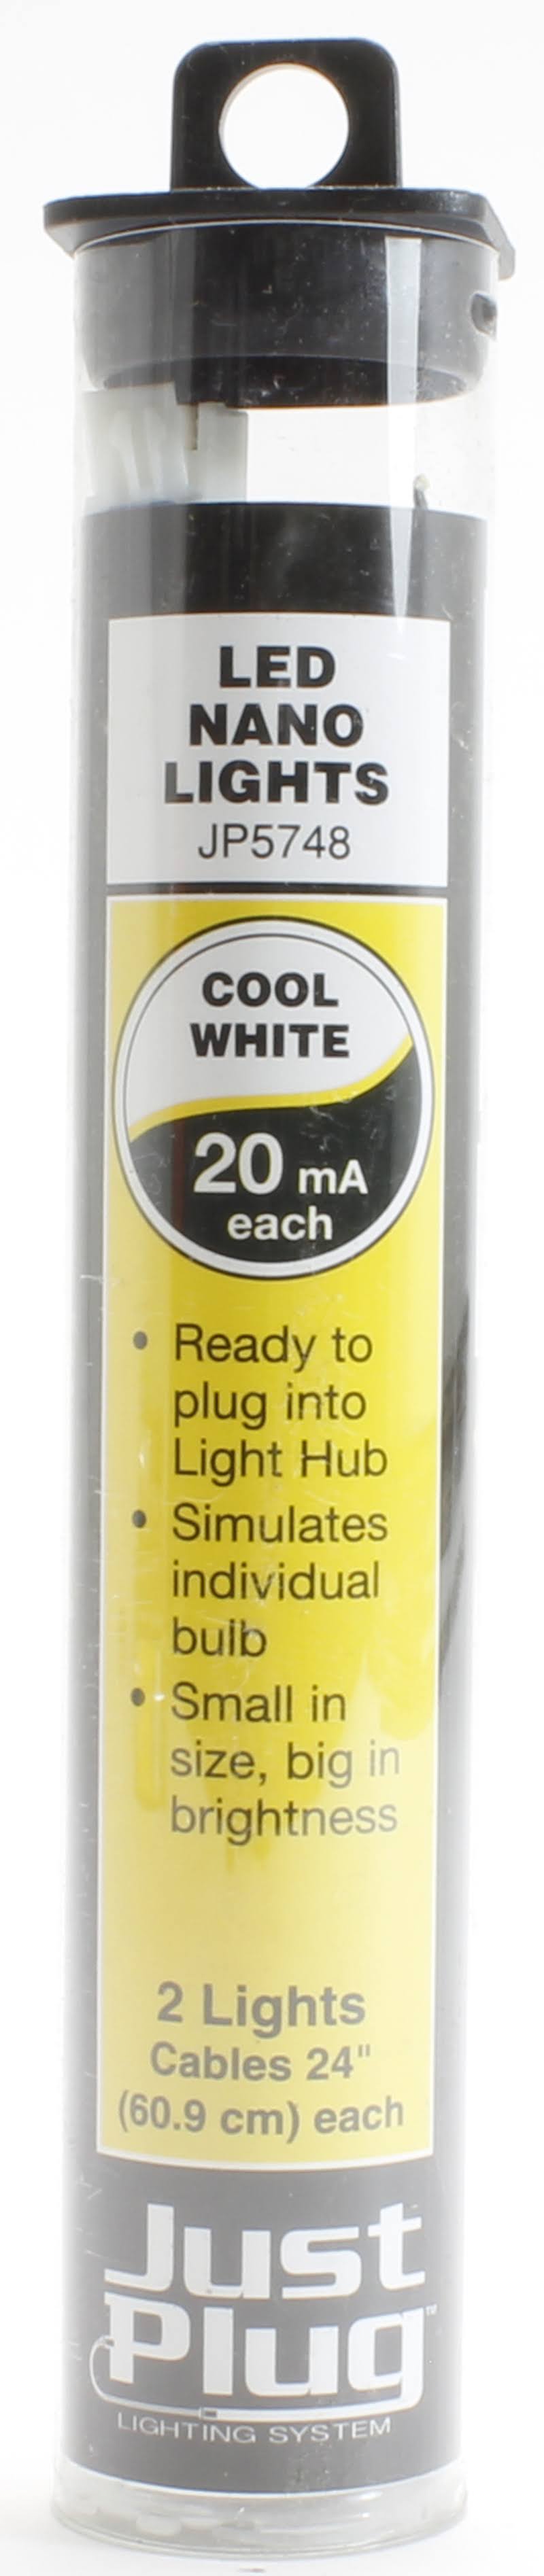 Woodland Scenics JP5748 Just Plug Cool White Nano LED Light (2)